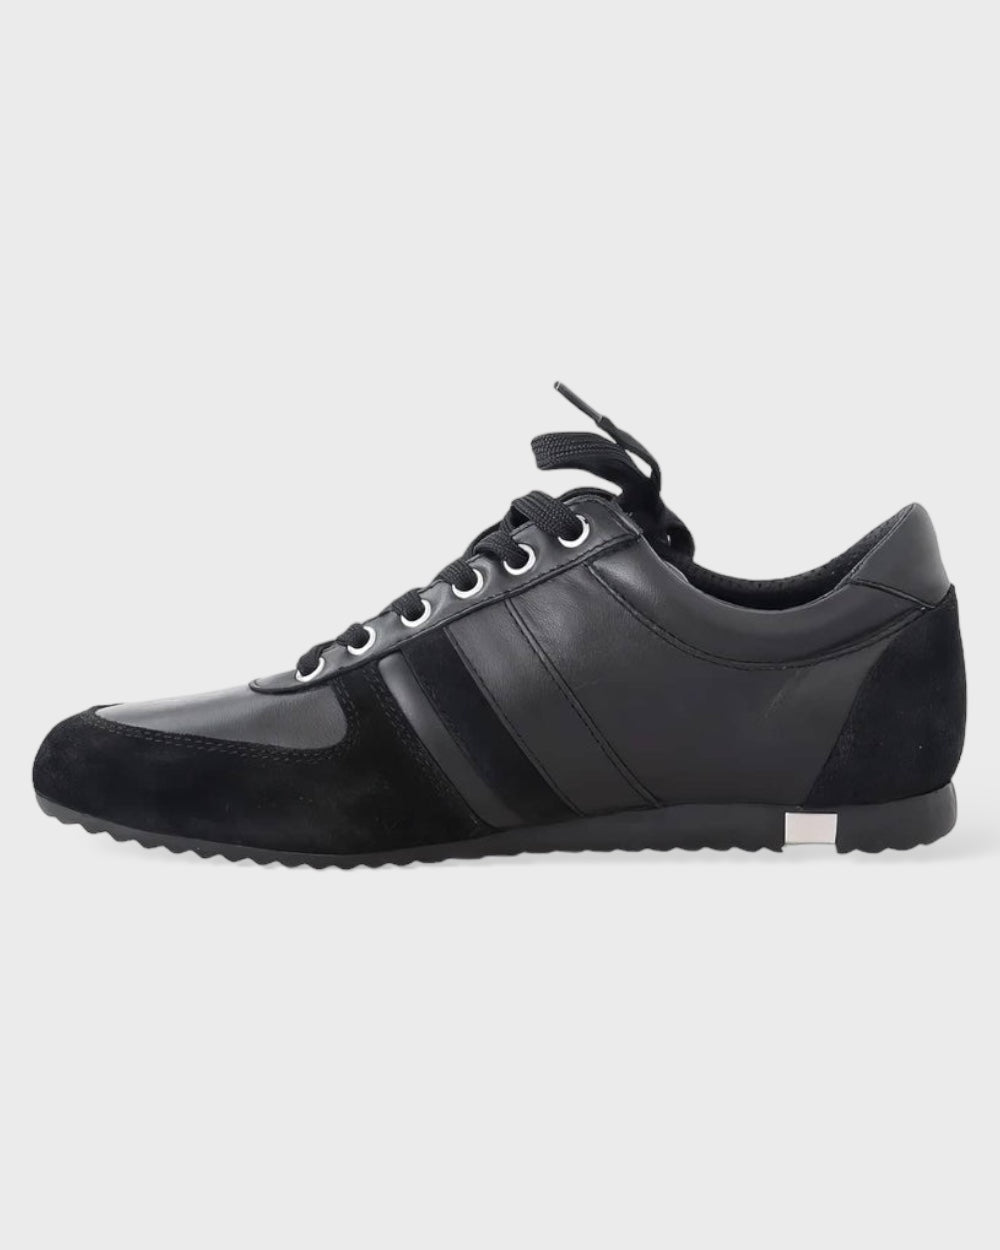 Dolce & Gabbana | Zwart Leren Casual Sneakers